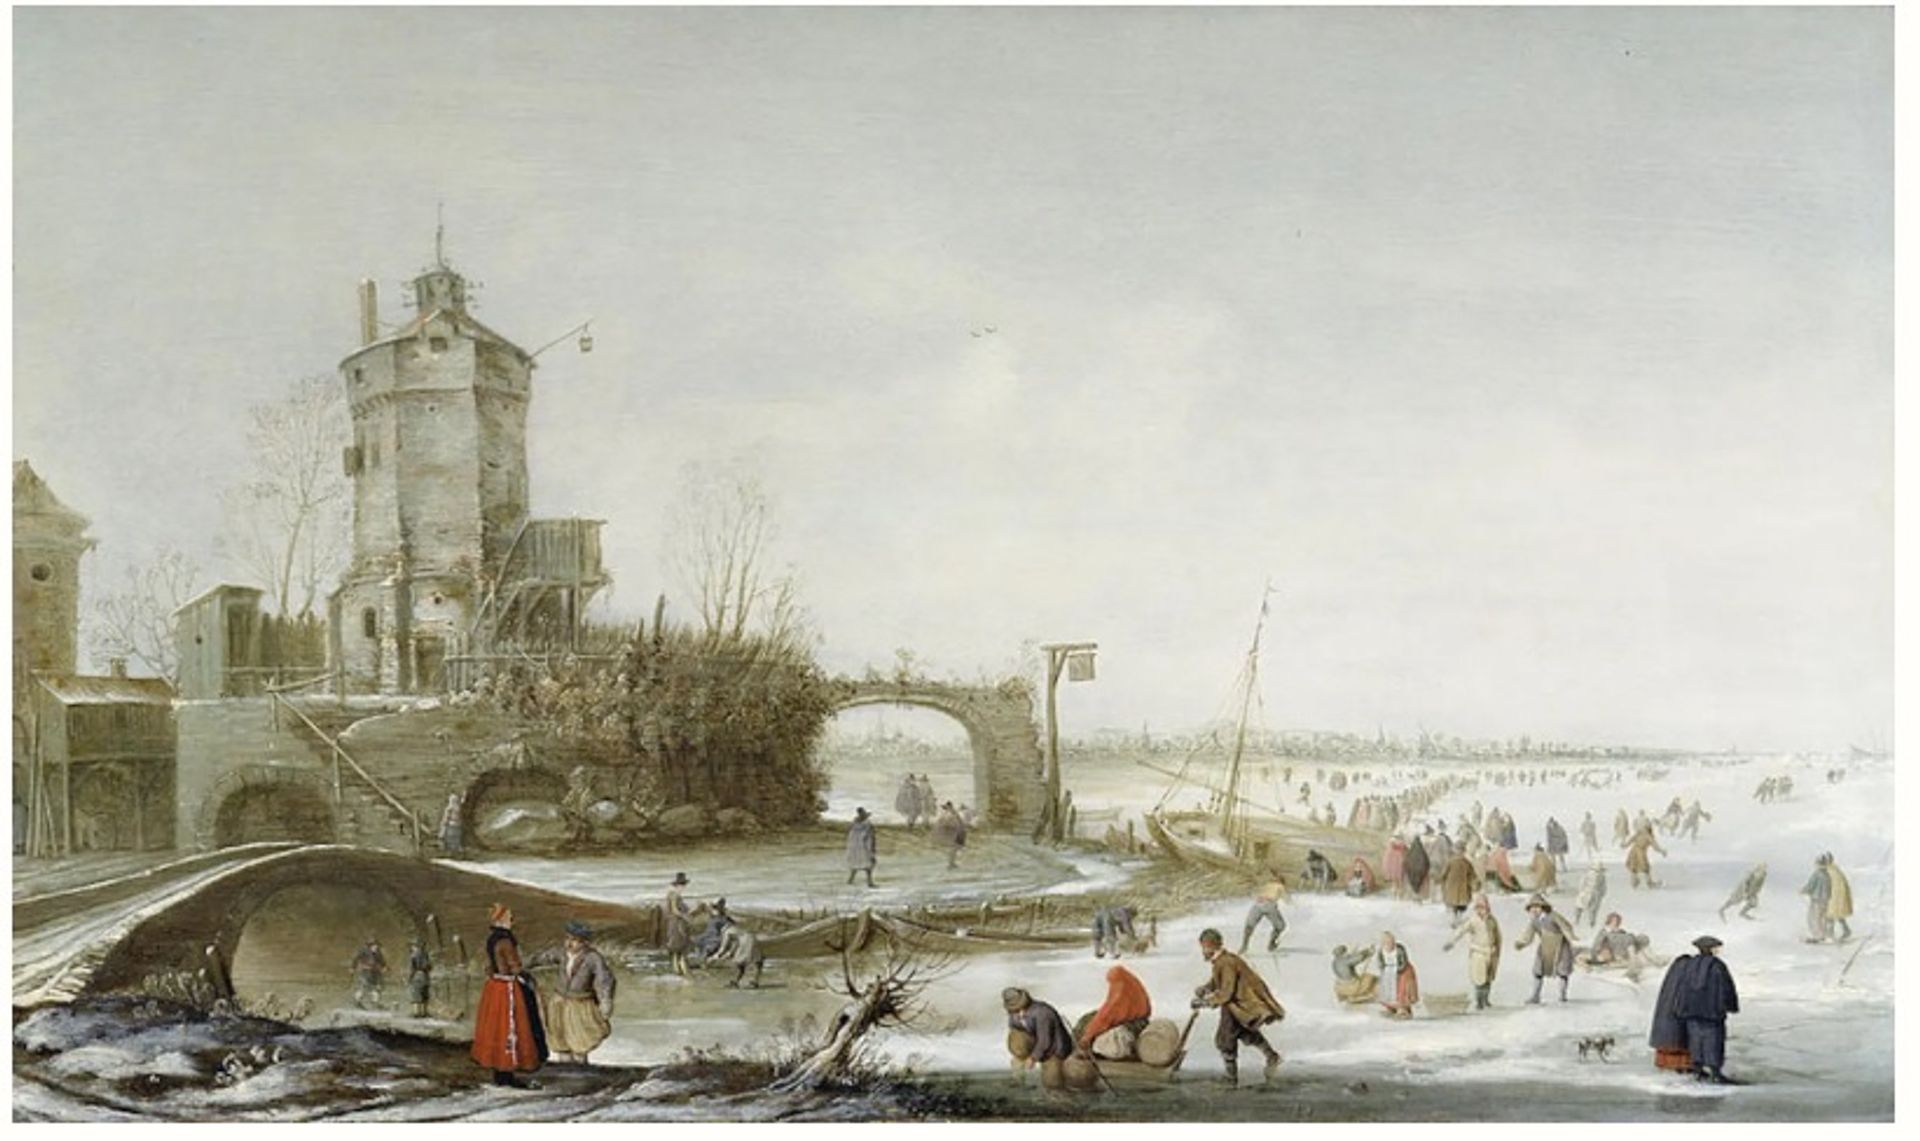 Hendrick Avercamp, נוף חורף עם מחליקים ודמויות אחרות, שנות ה-1630

דרך Wikimedia Common